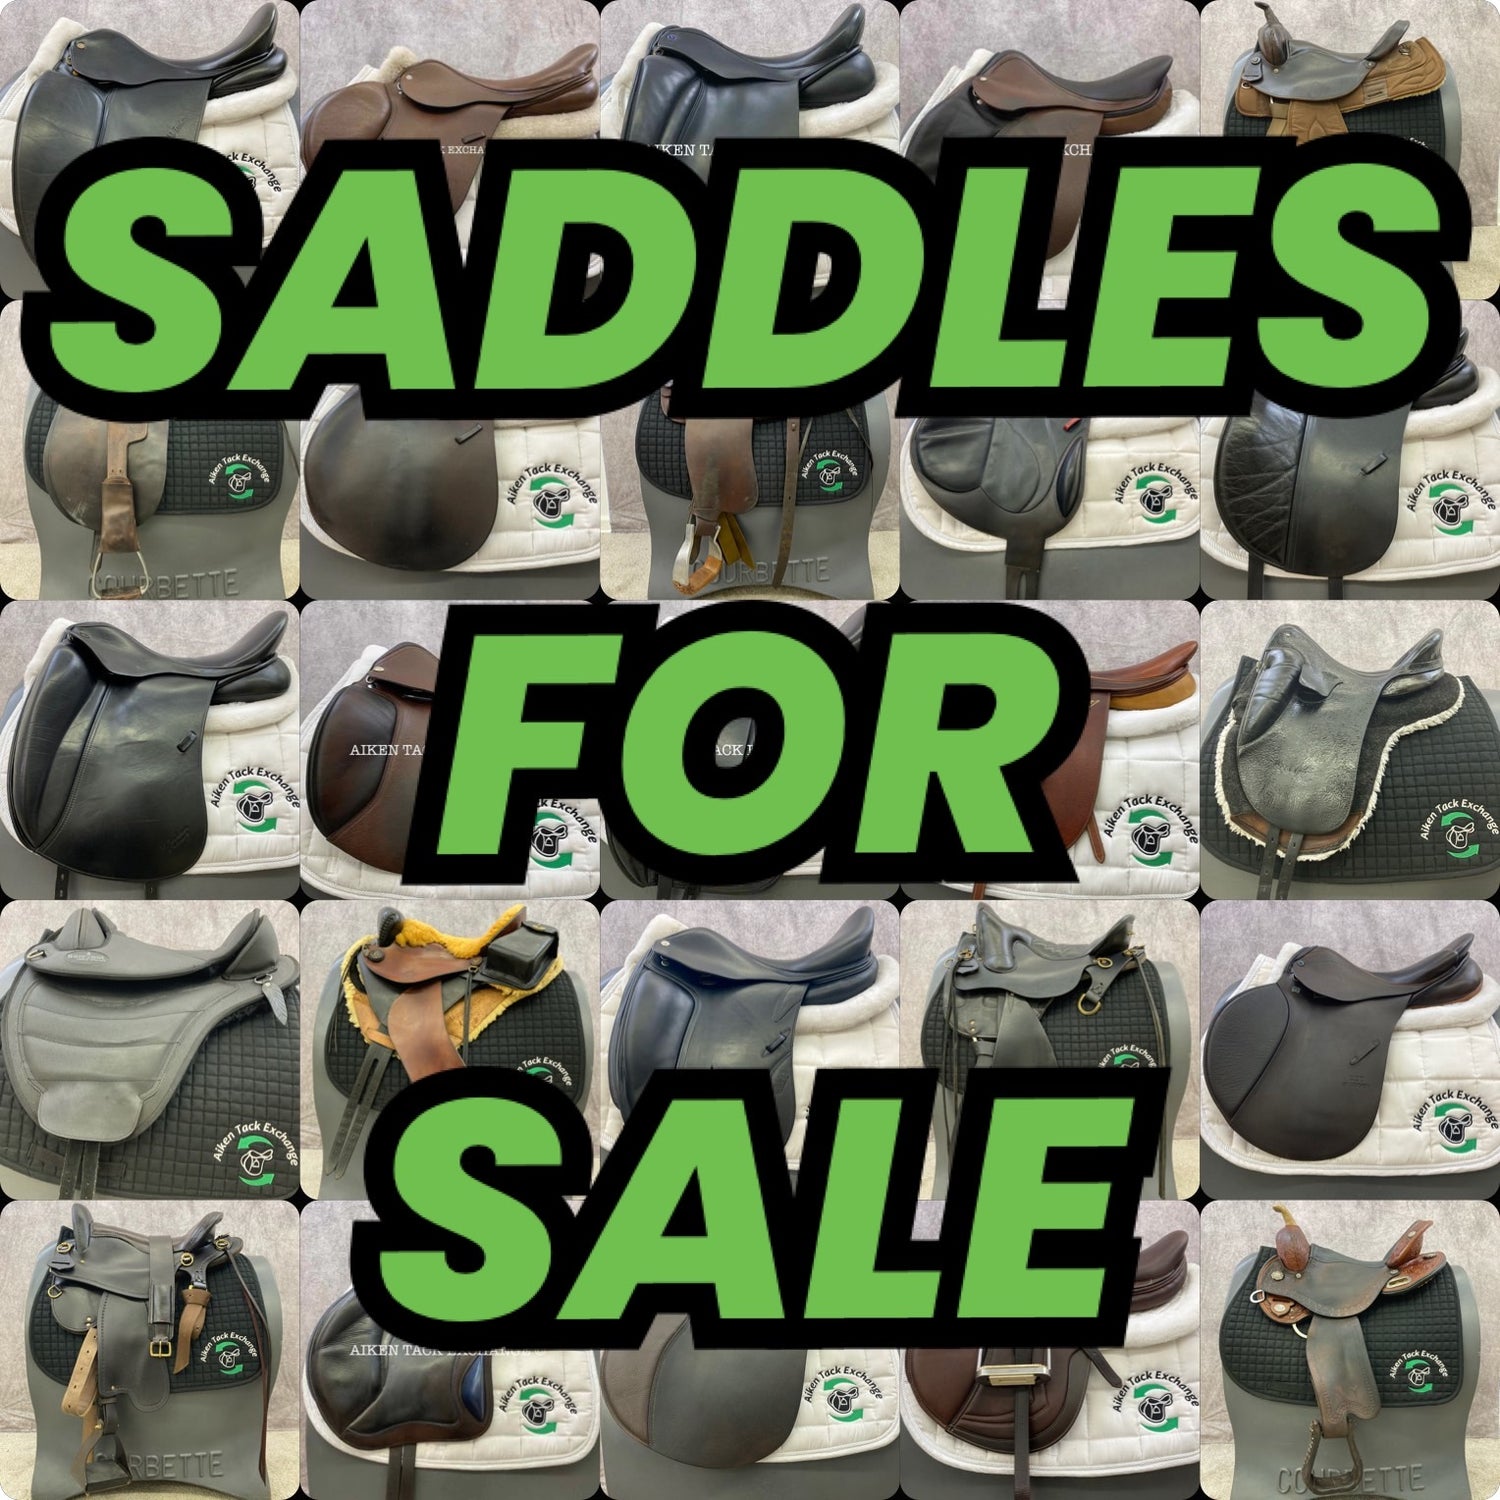 All Saddles - Full Inventory